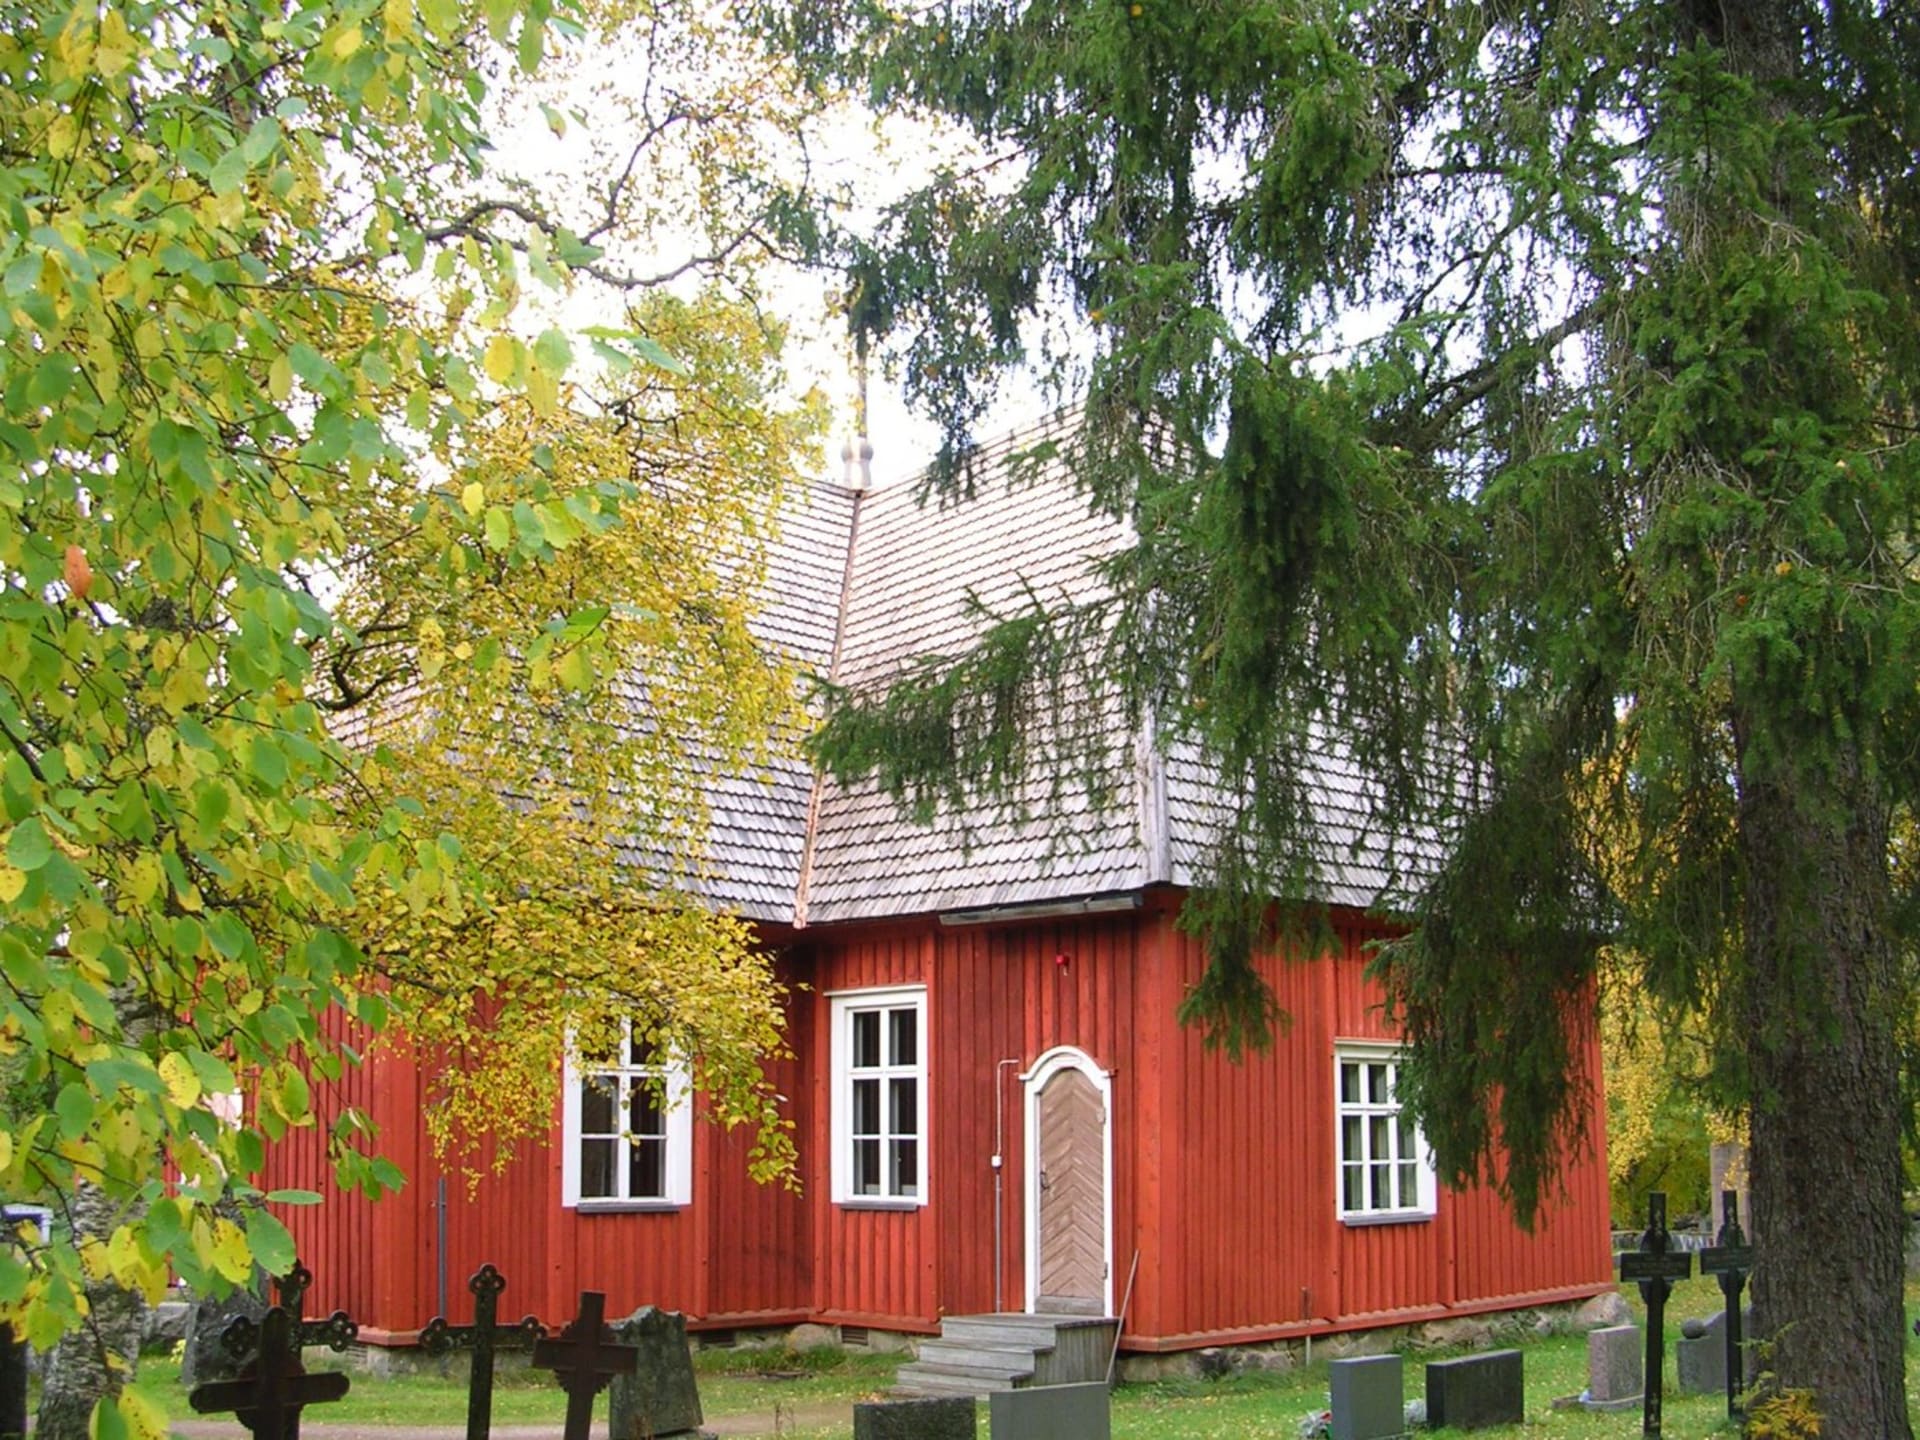 Small red wooden church of Revonlahti in Siikajoki